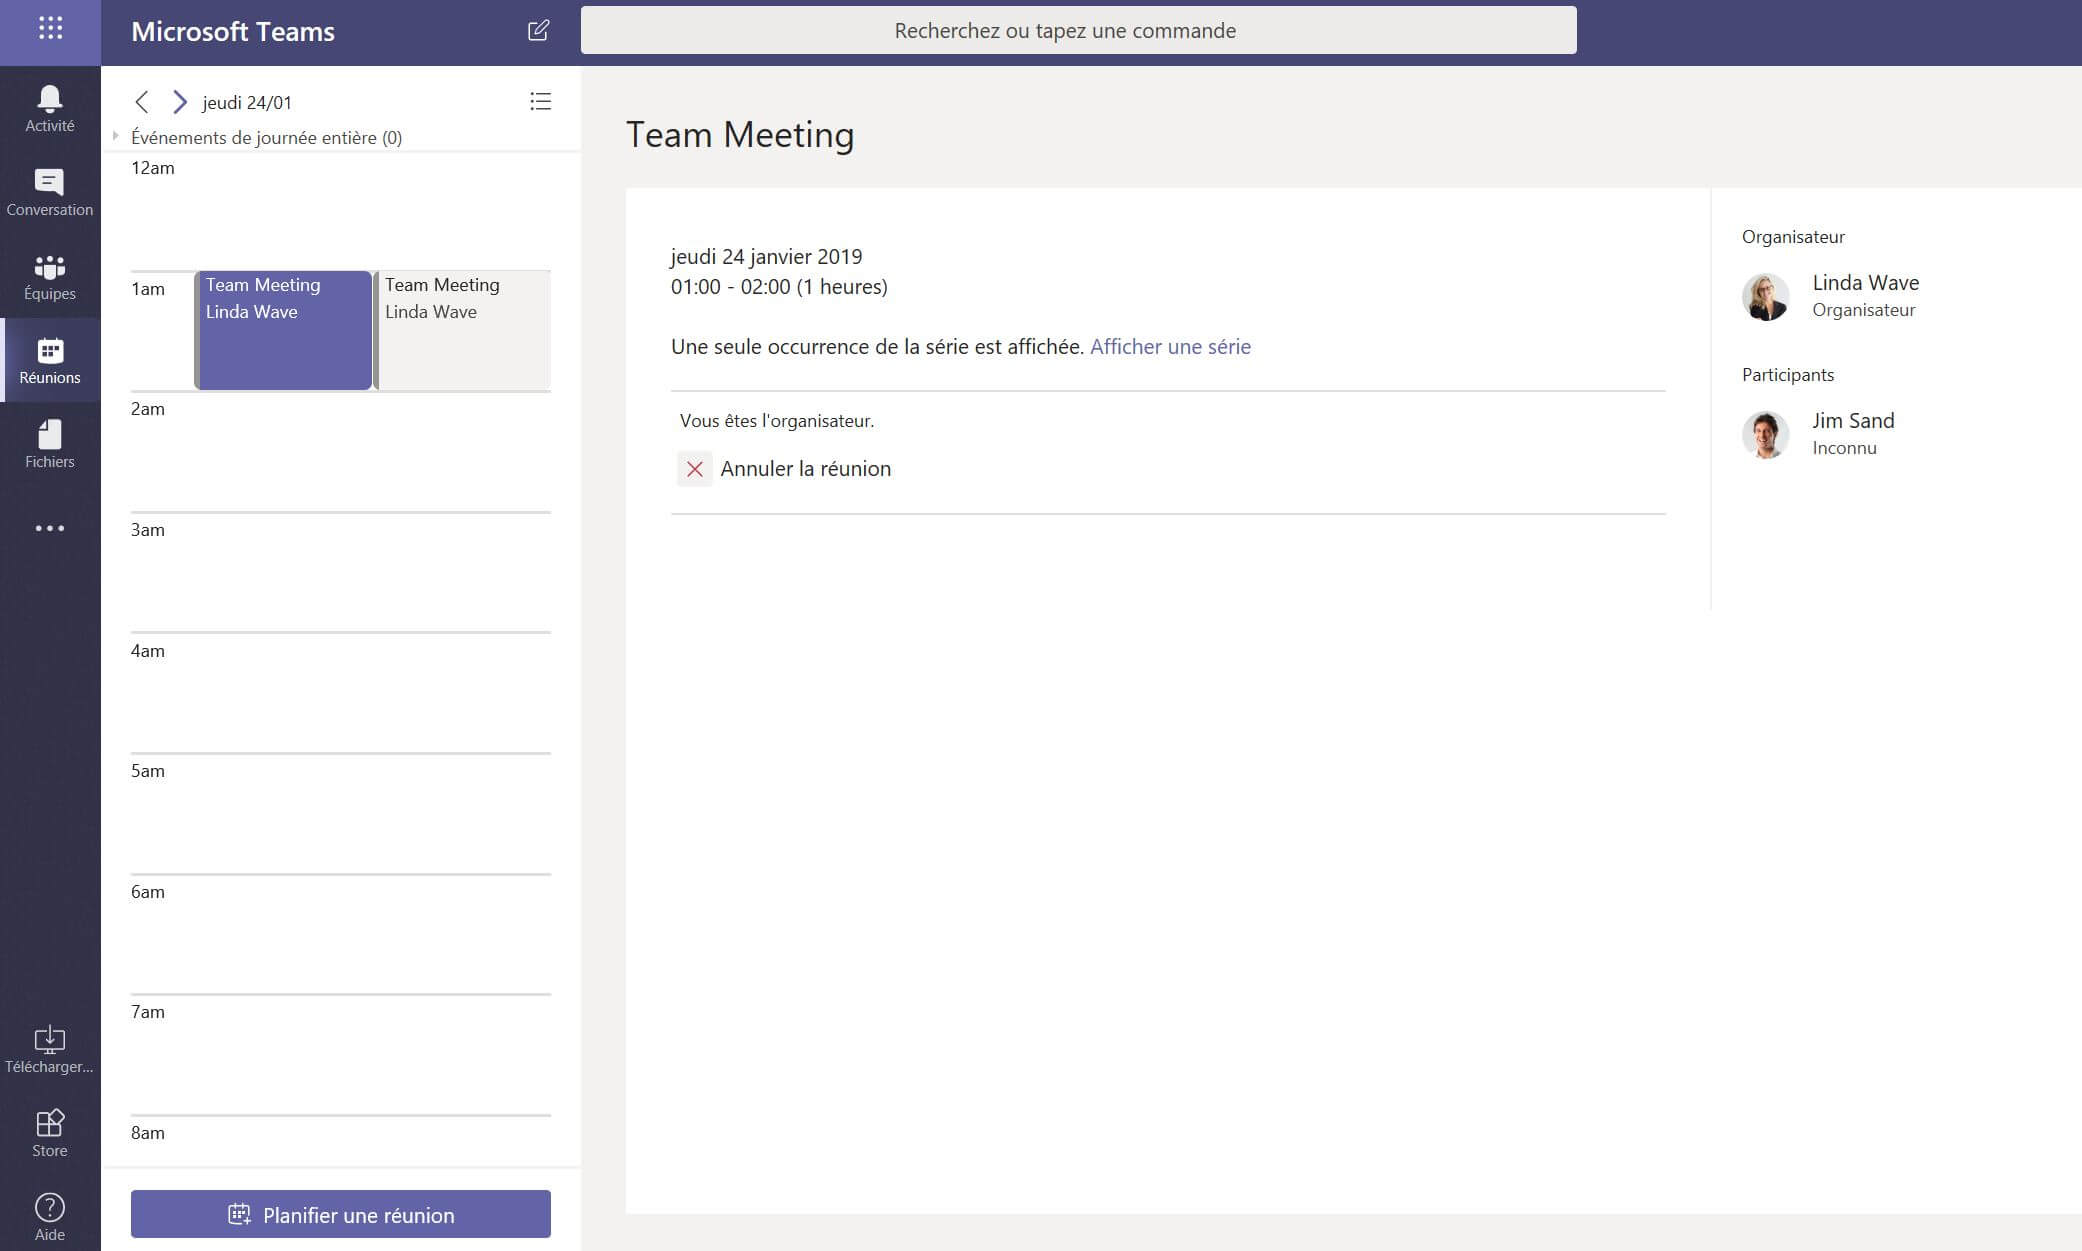 Microsoft Teams Meeting feature